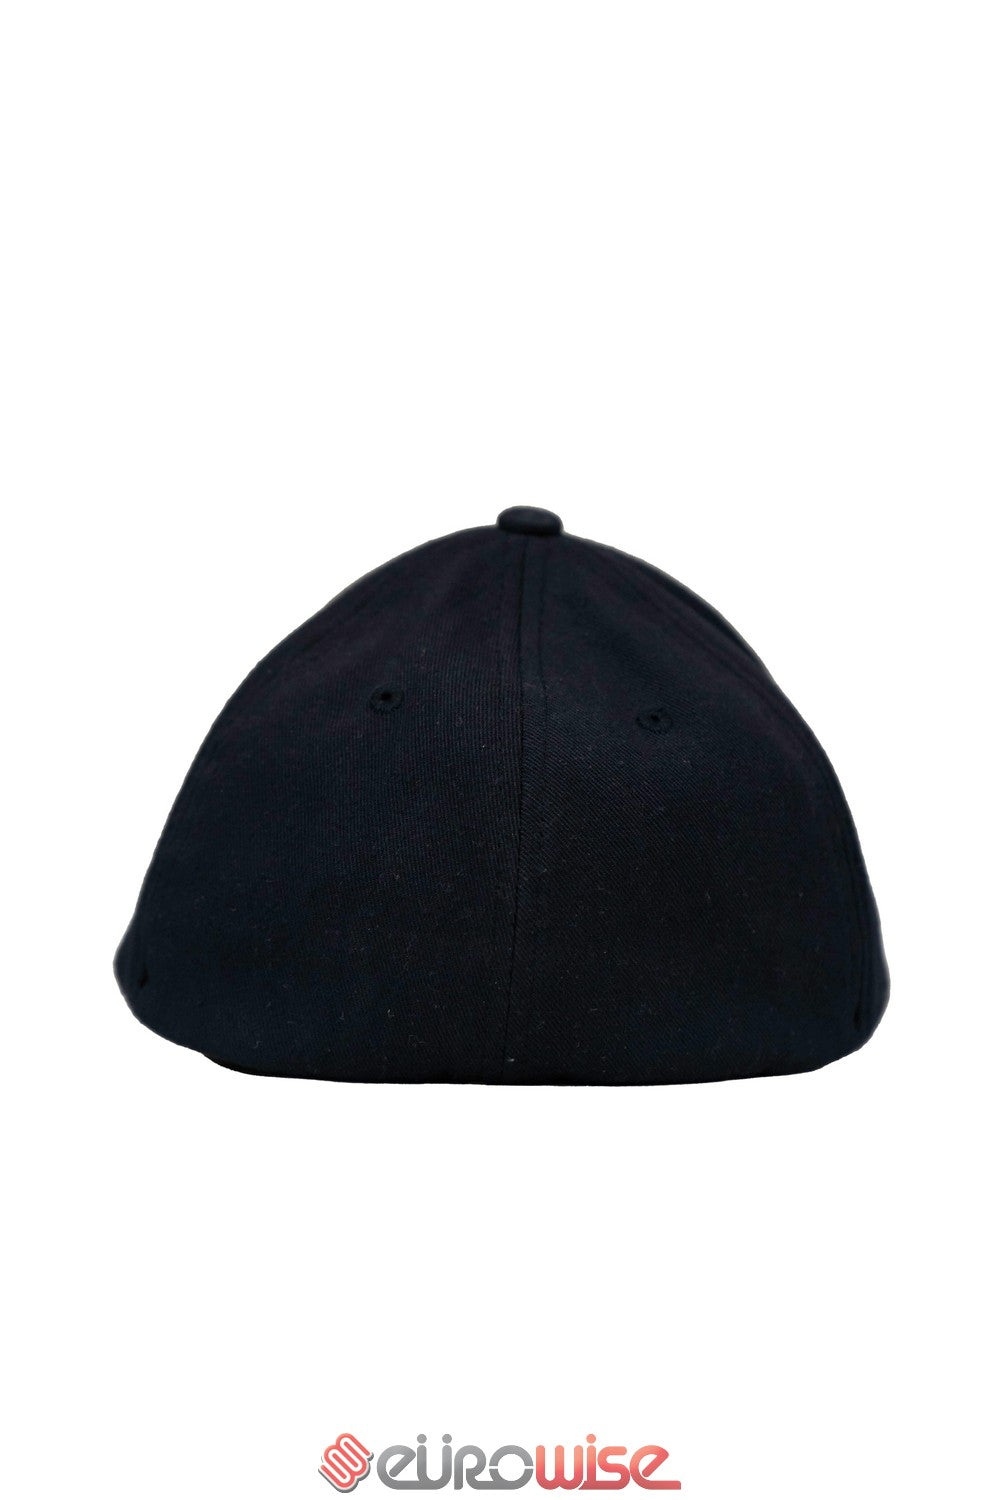 EW Fitted Logo Hat ( Navy / White Stitch )